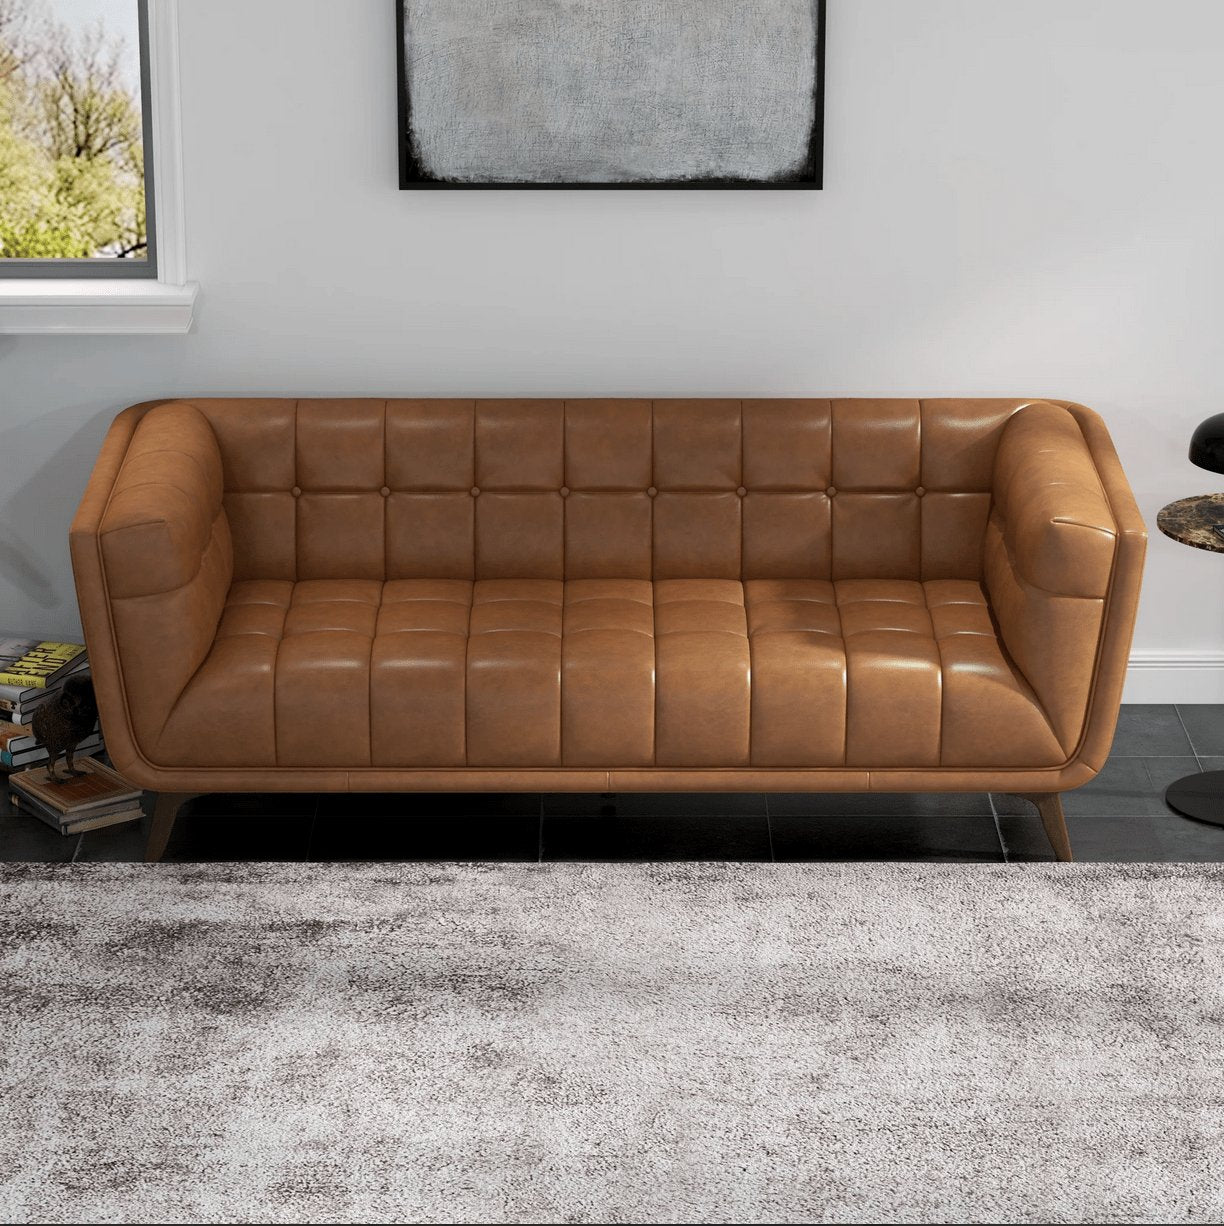 Addison MCM Styled Tufted Sofa Couch 86” - Revel Sofa 